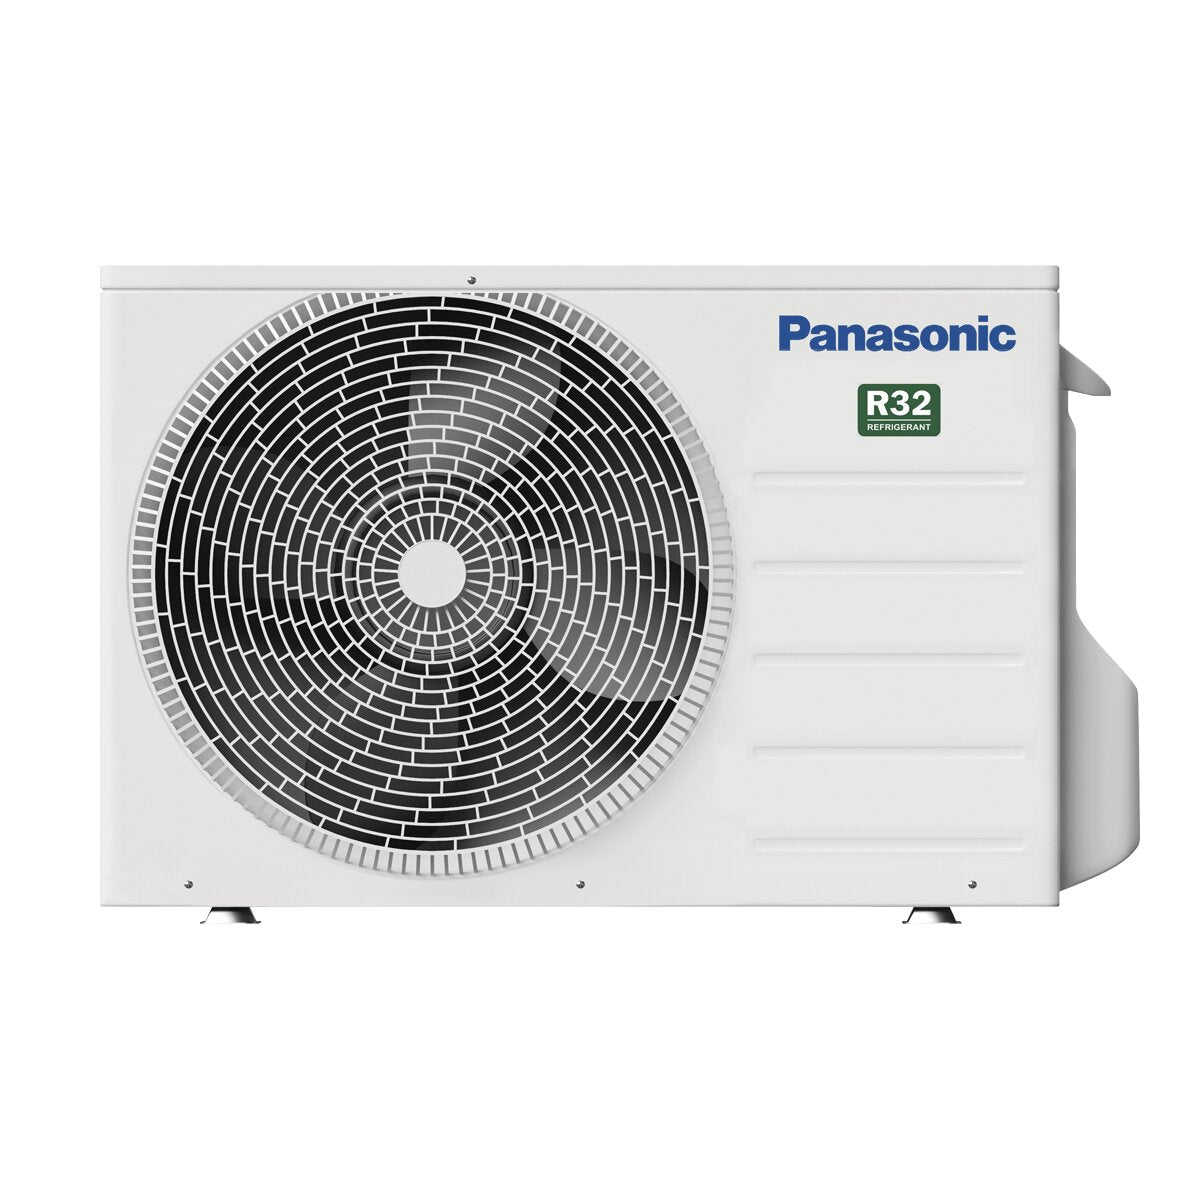 Panasonic Air Conditioner BZ Series 18000 BTU R32 Inverter A++/A+